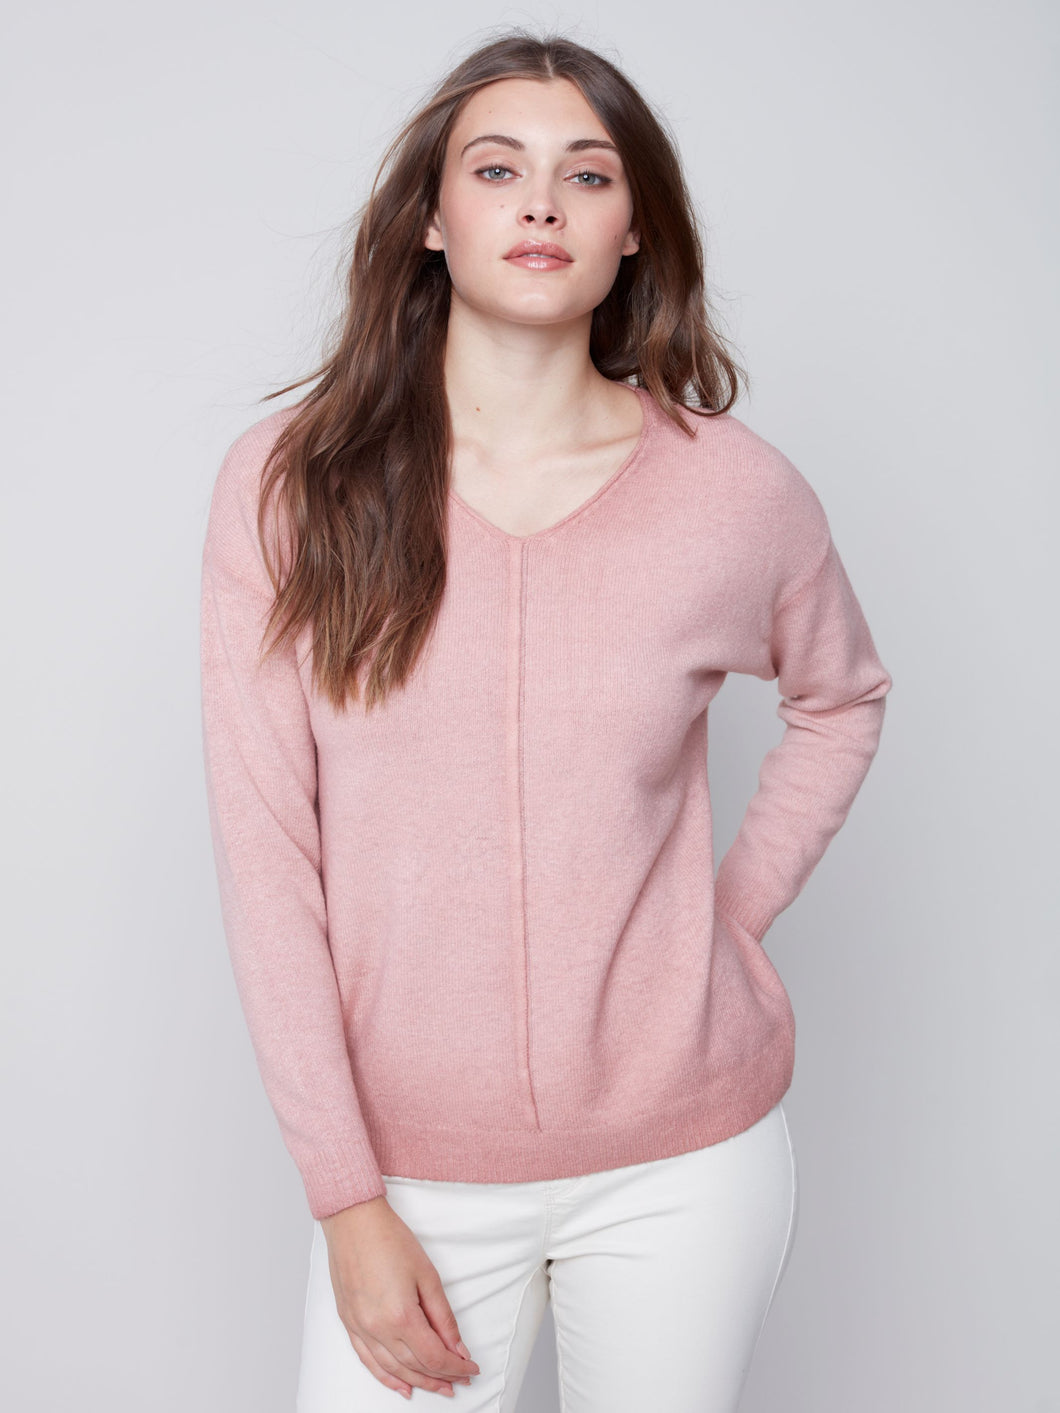 Charlie B Raspberry V-Neck Cold Dye Sweater - Wool Blend